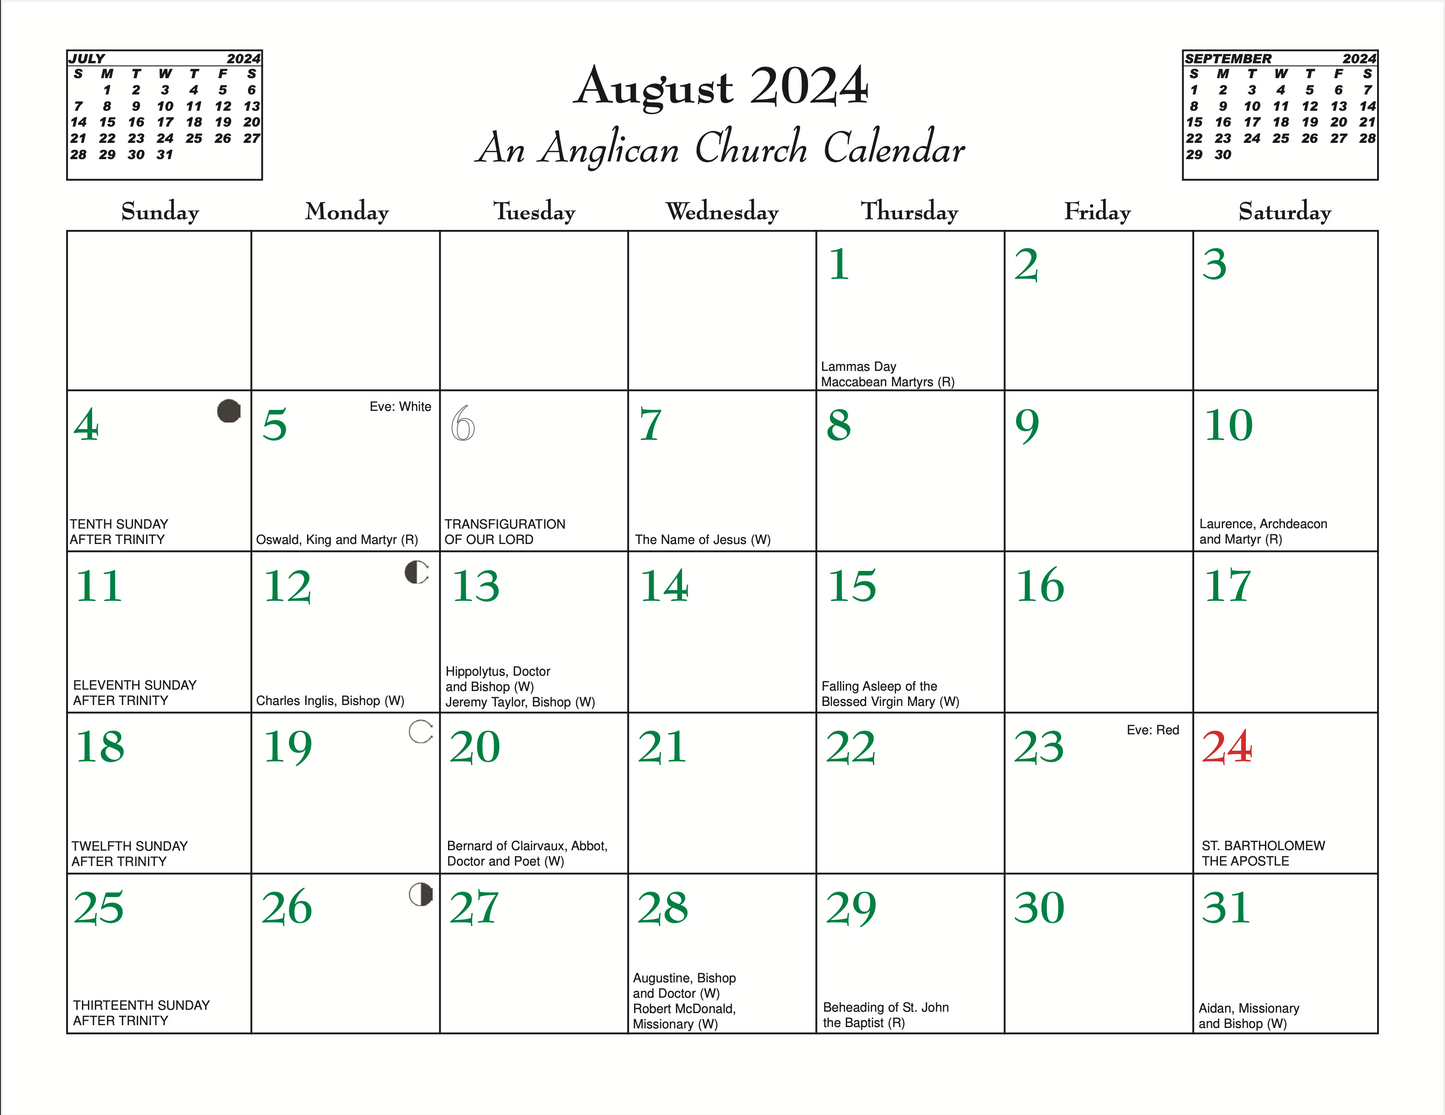 An Anglican Church Calendar 2024